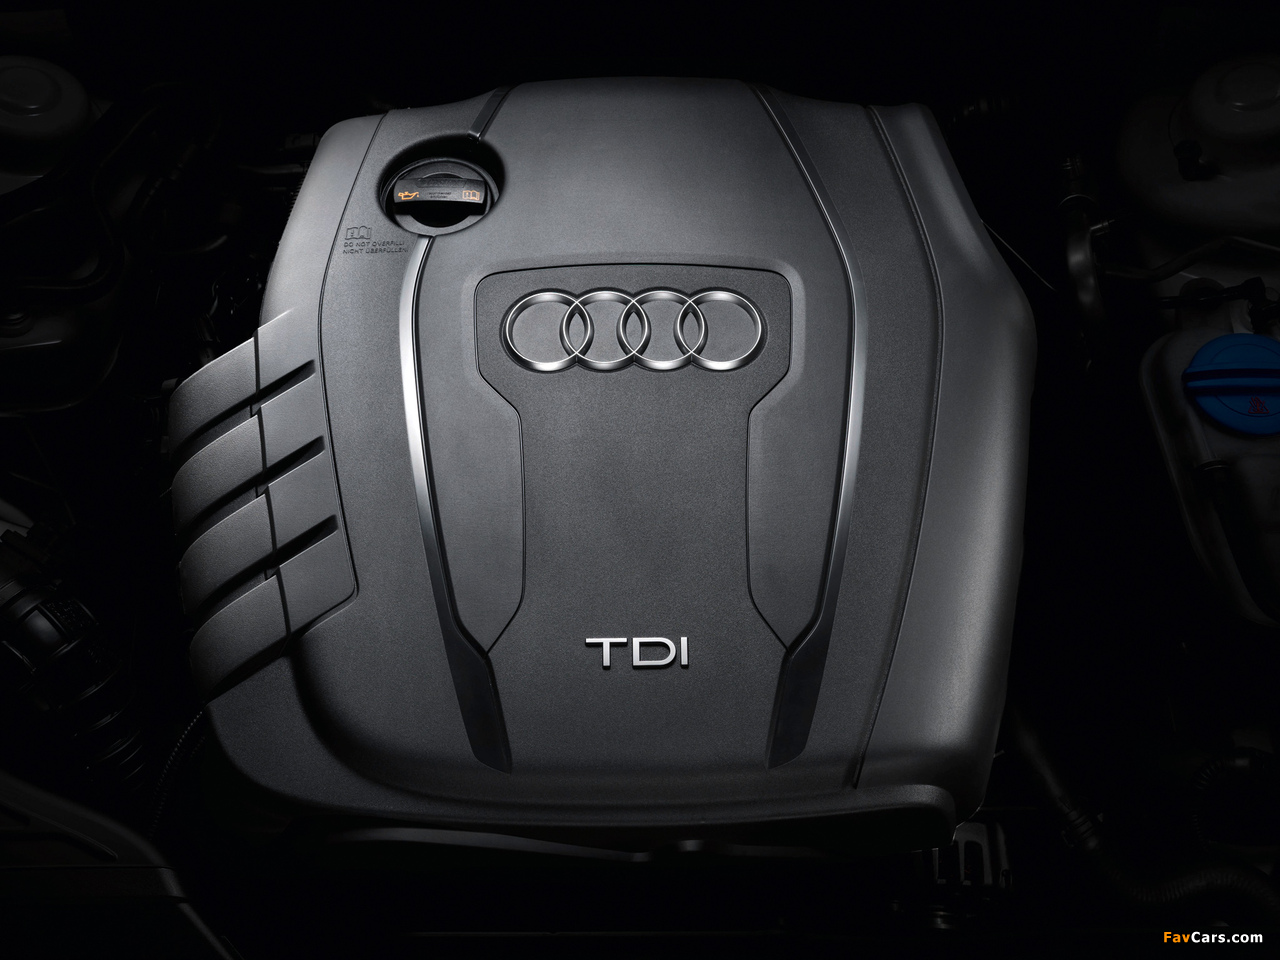 Audi A4 2.0 TDI quattro Avant (B8,8K) 2012 pictures (1280 x 960)